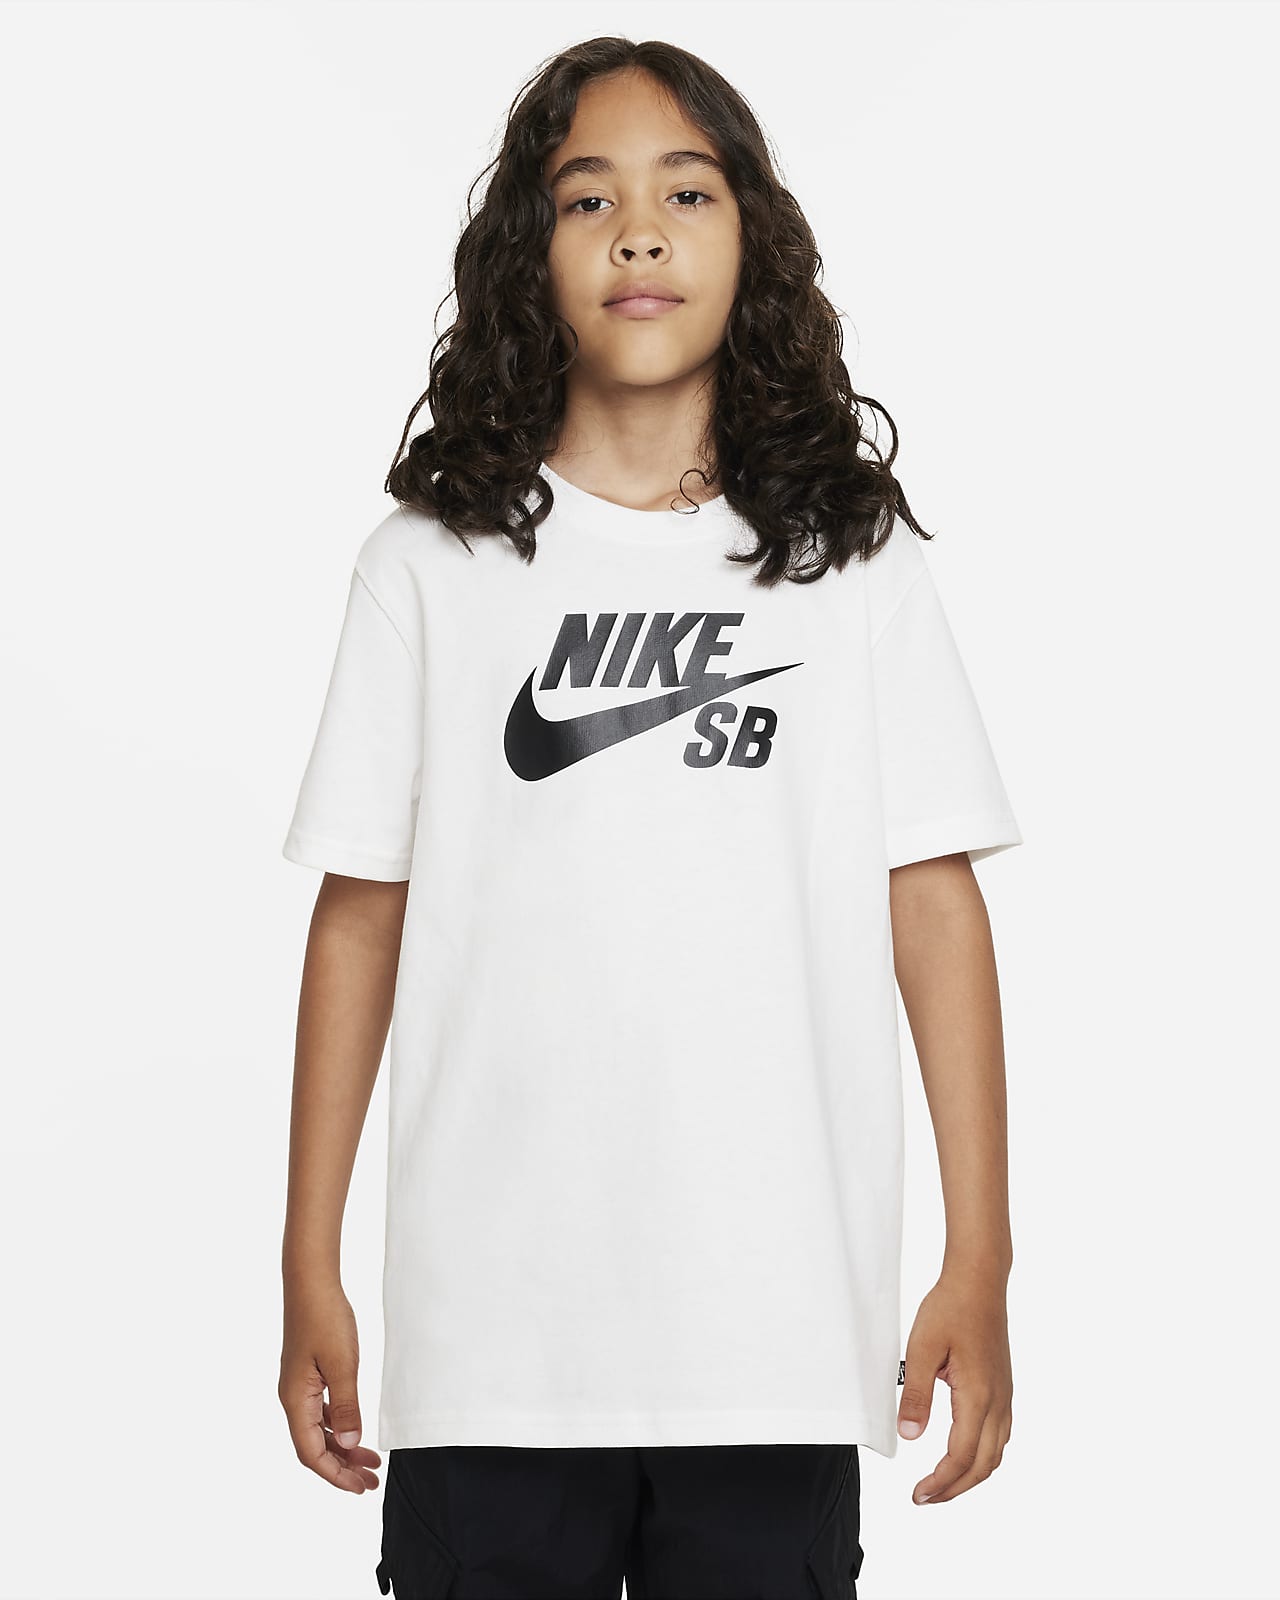 Nike Older Kids' T-Shirt. ID